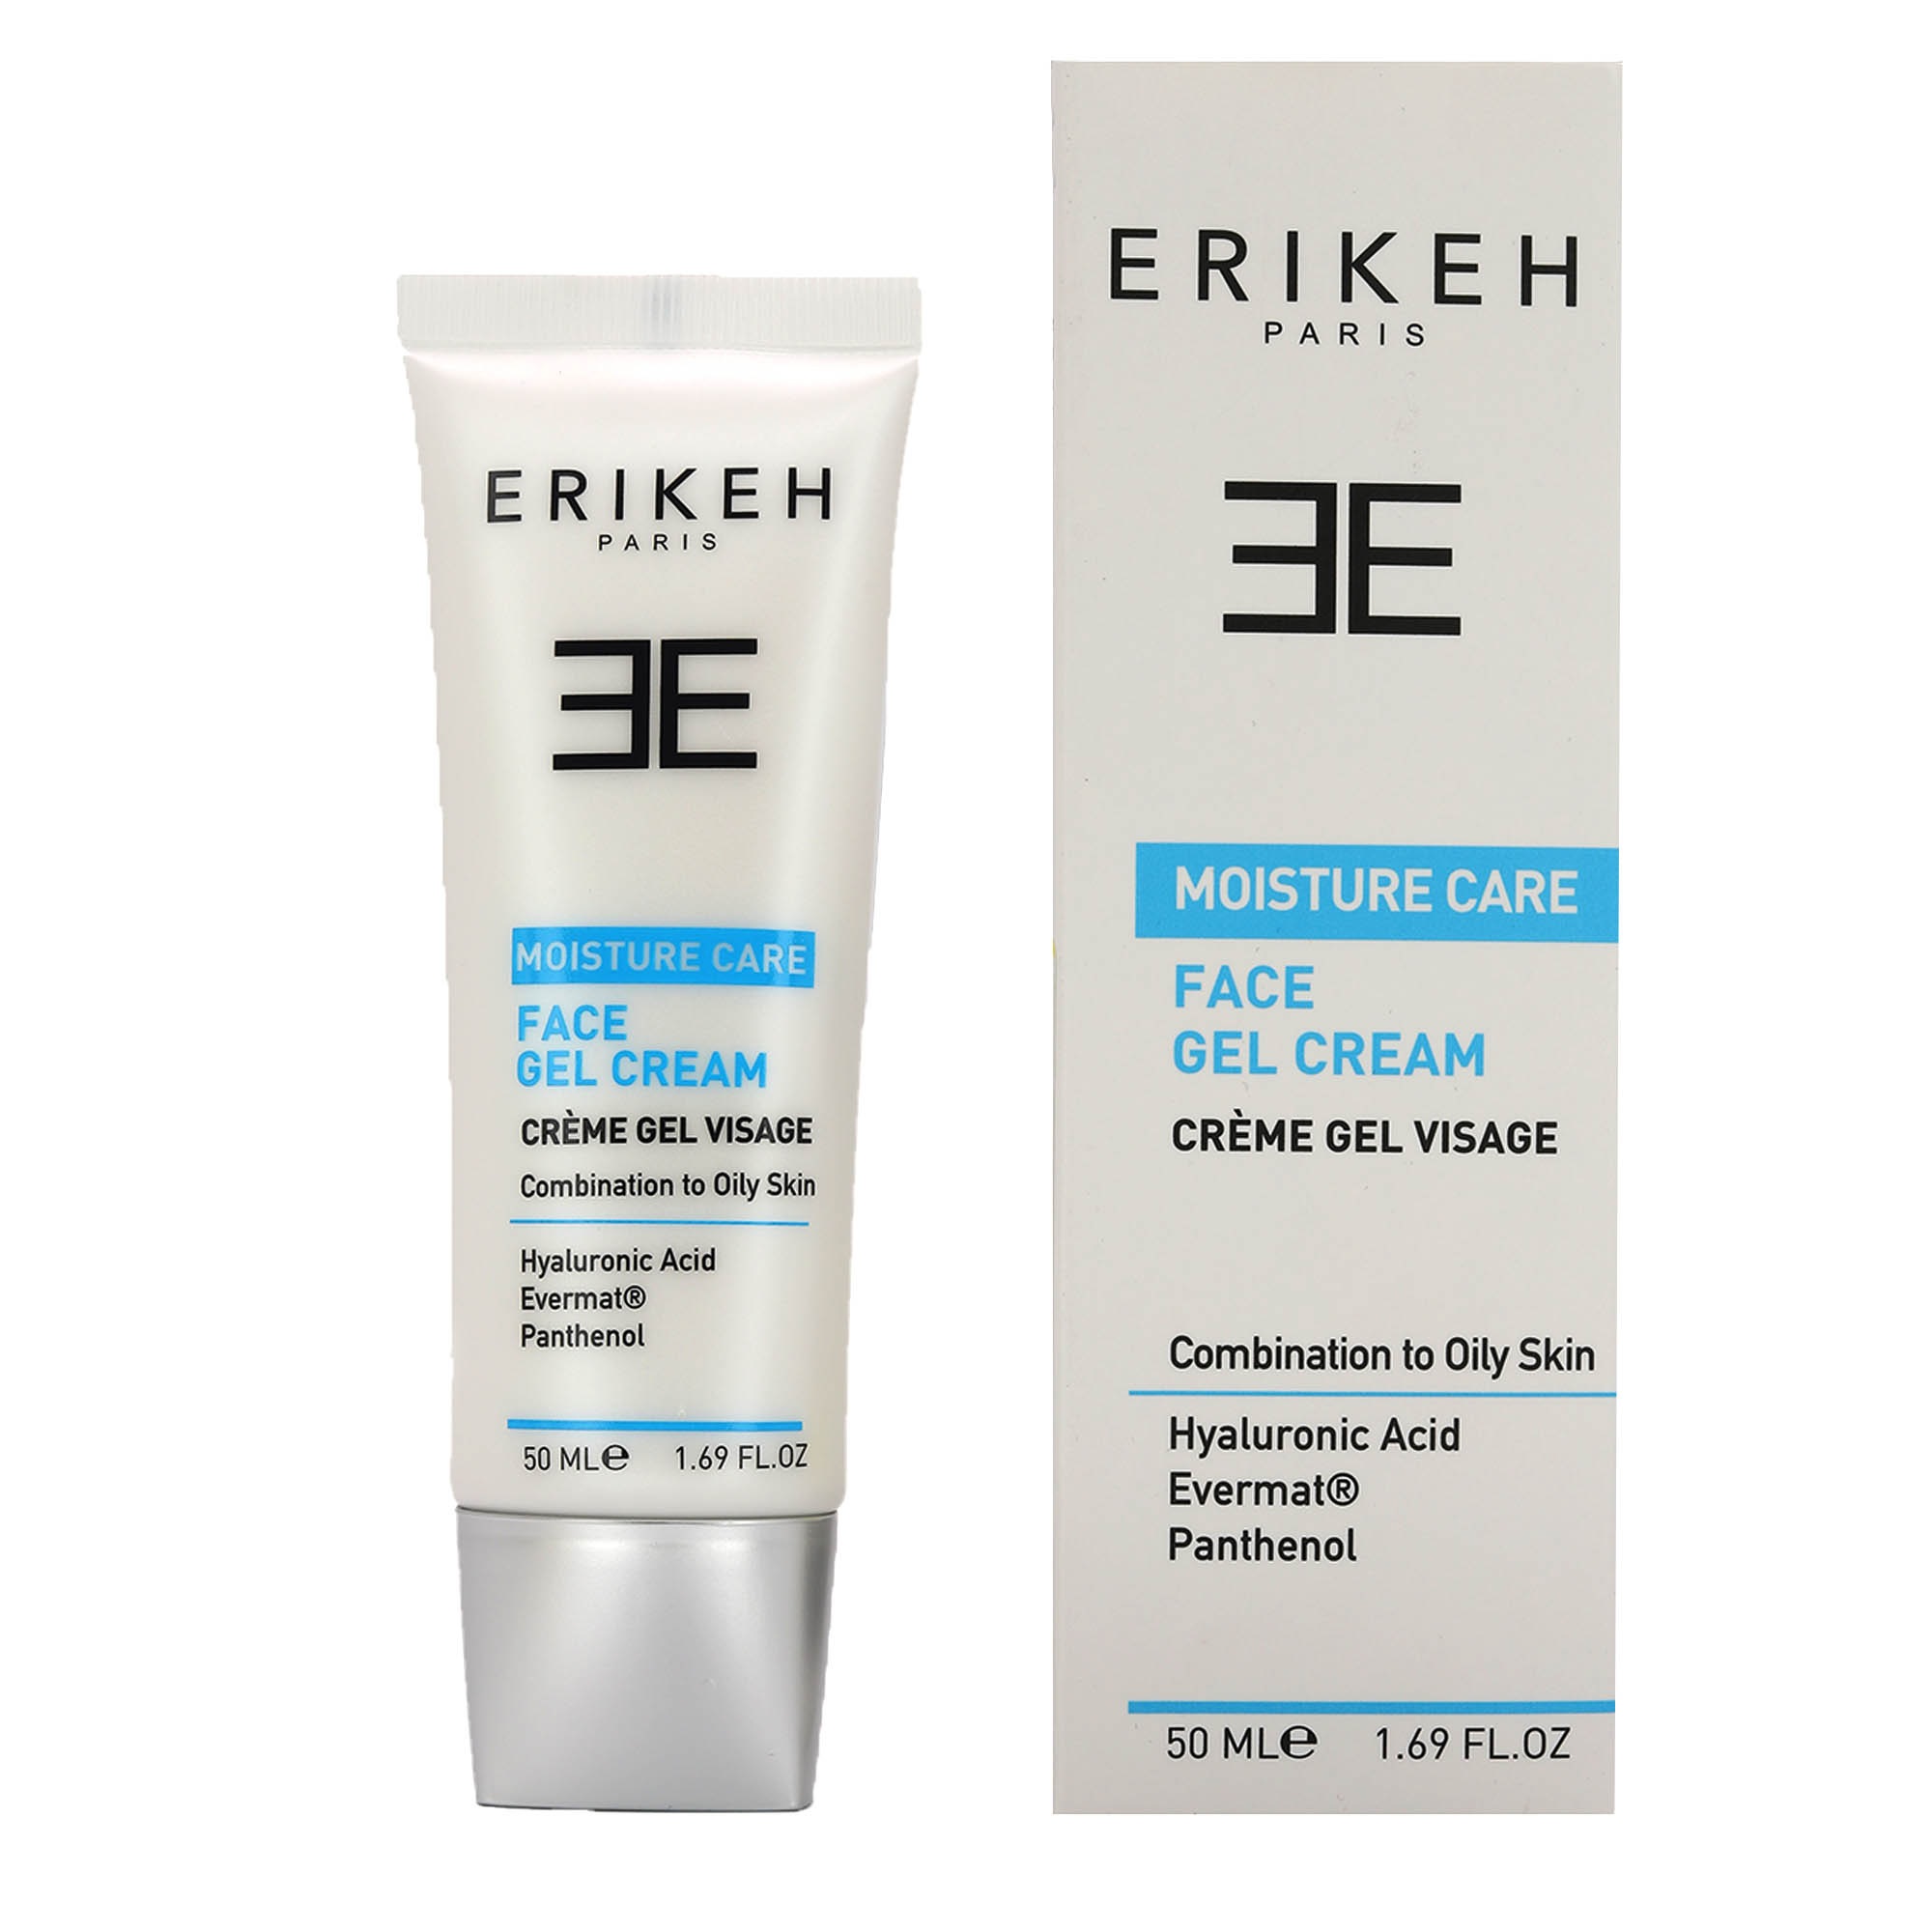 Erikeh -oily skin cream gel and moisturizer - Erikeh